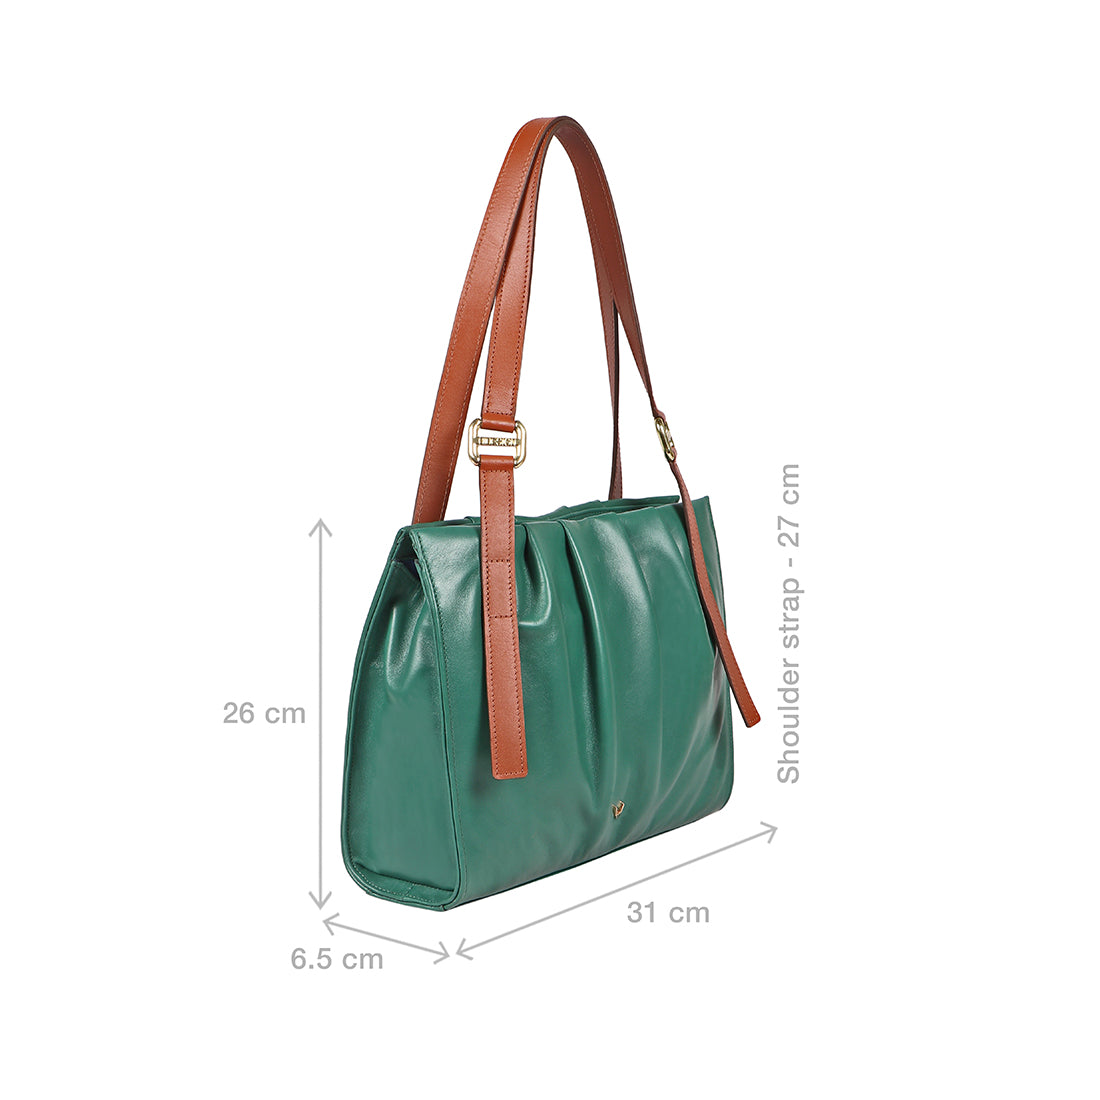 Buy Green Chiquita 01 Shoulder Bag Online - Hidesign